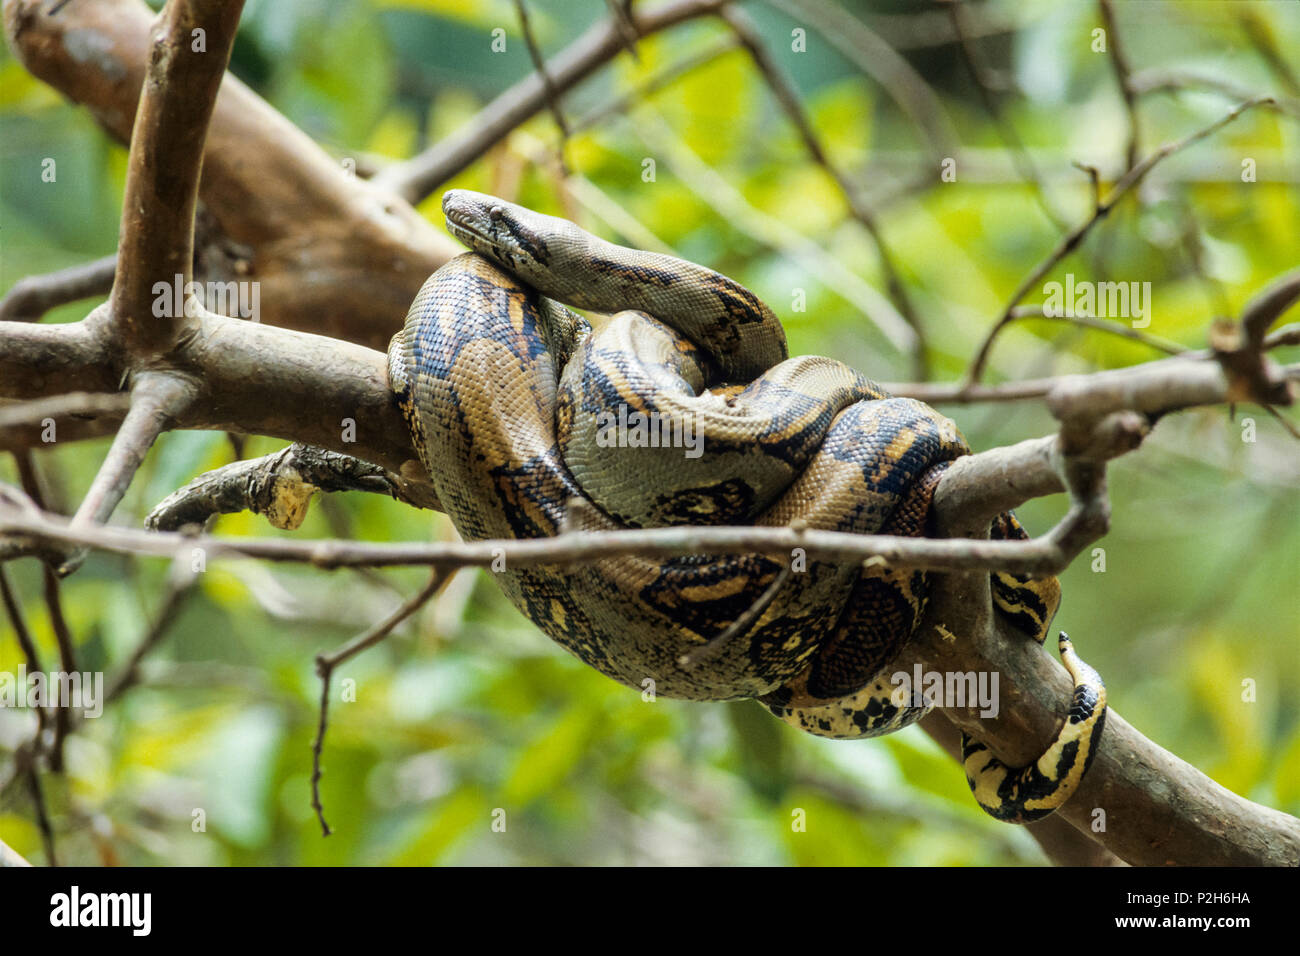 Snake in tree, Boa constrictor, Costa Rica Stock Photo